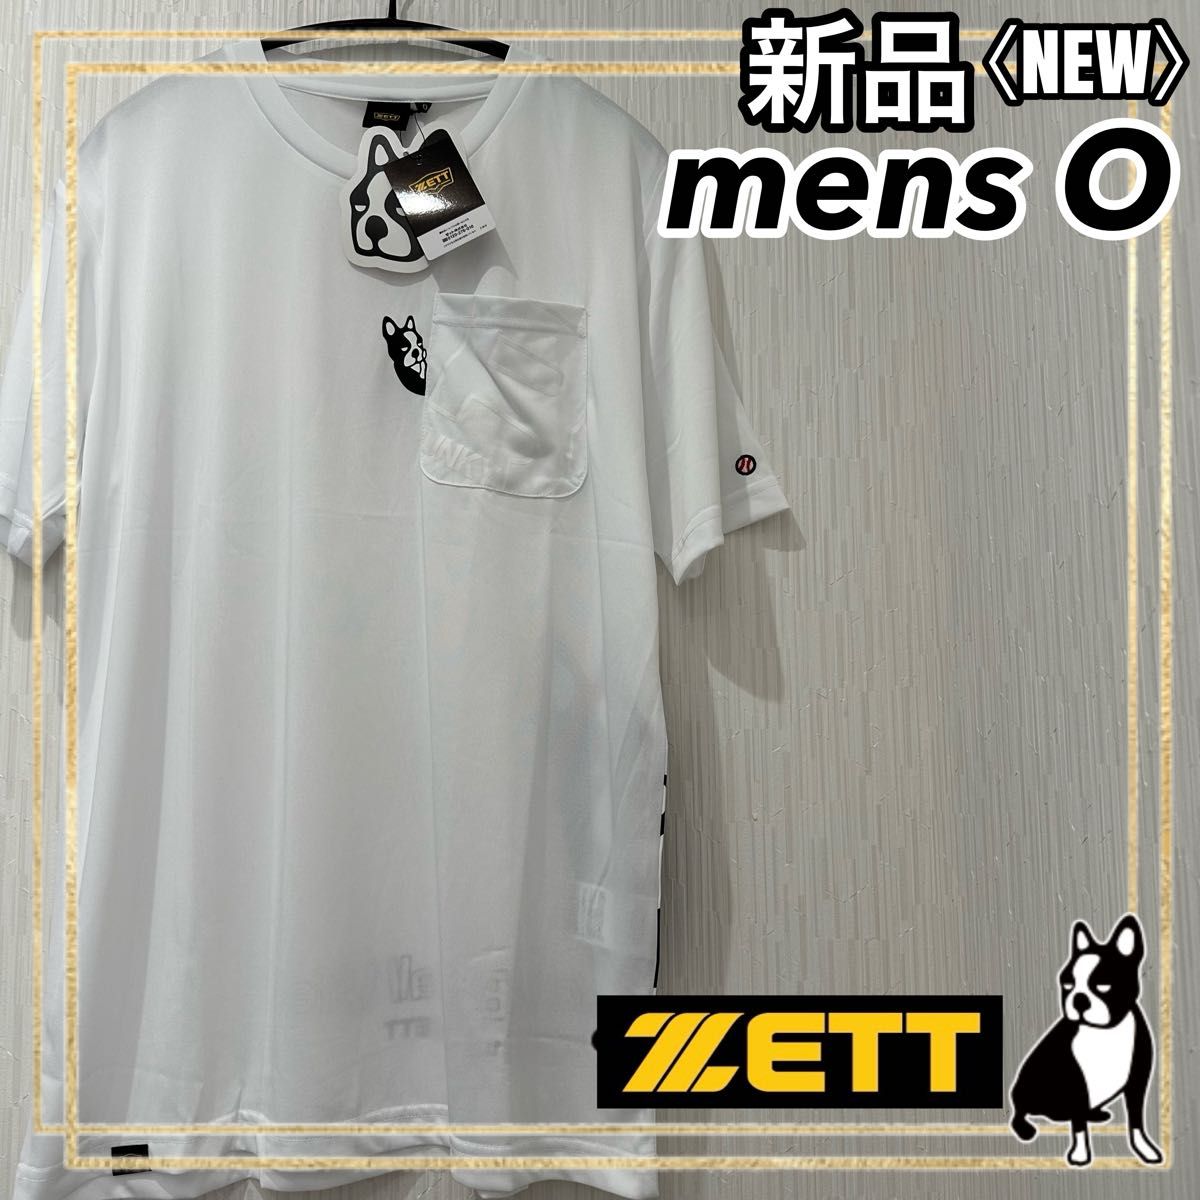 ZETTゼット 野球ベースボールジャンキー半袖Tシャツ ホワイト メンズO 新品